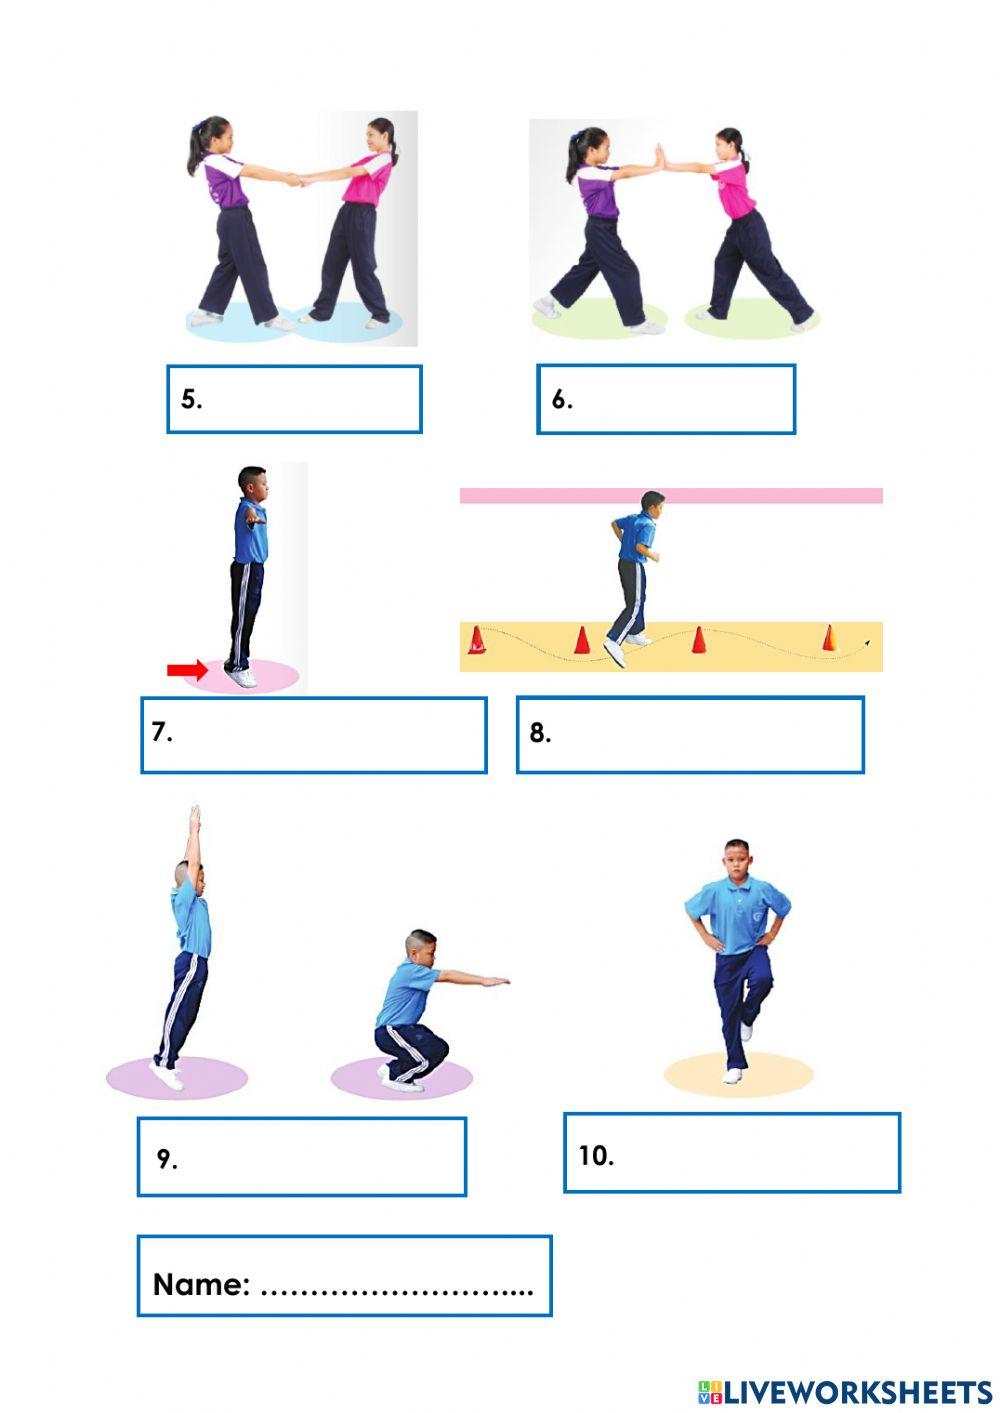 Basic body movements